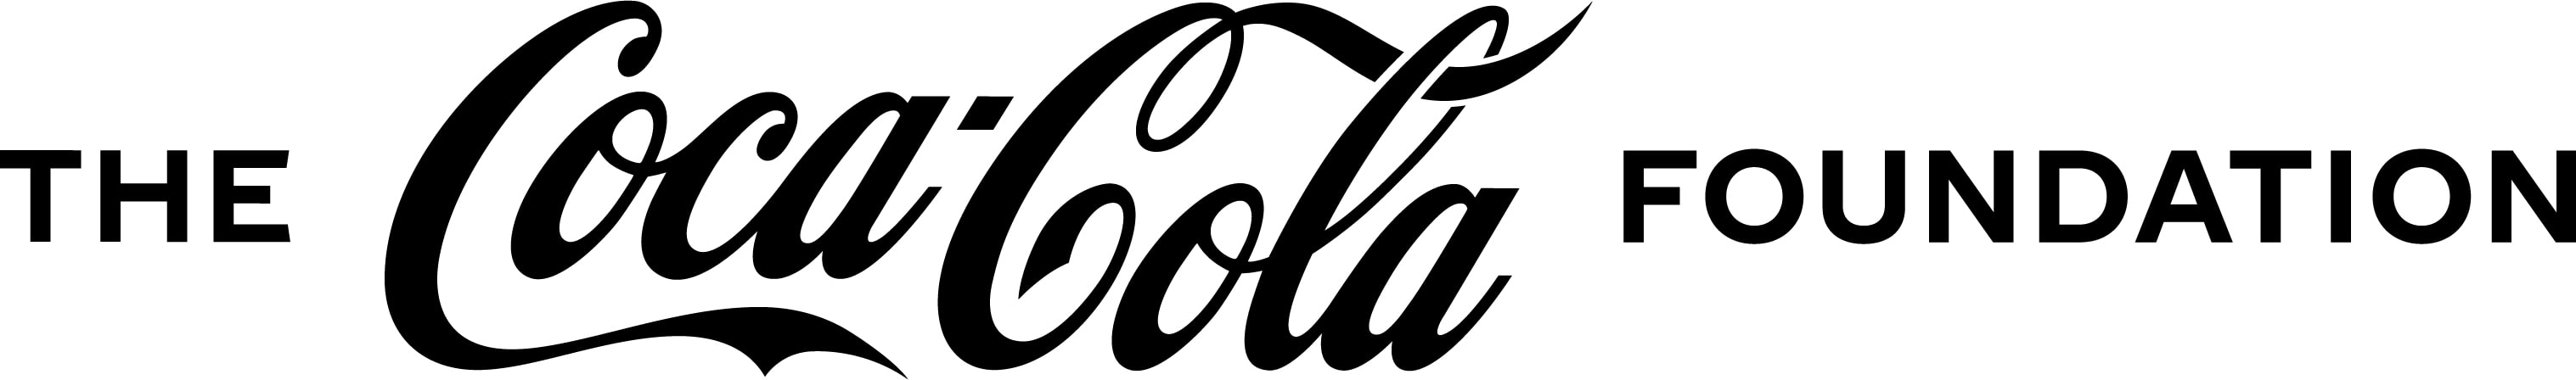 cococola foundation logo